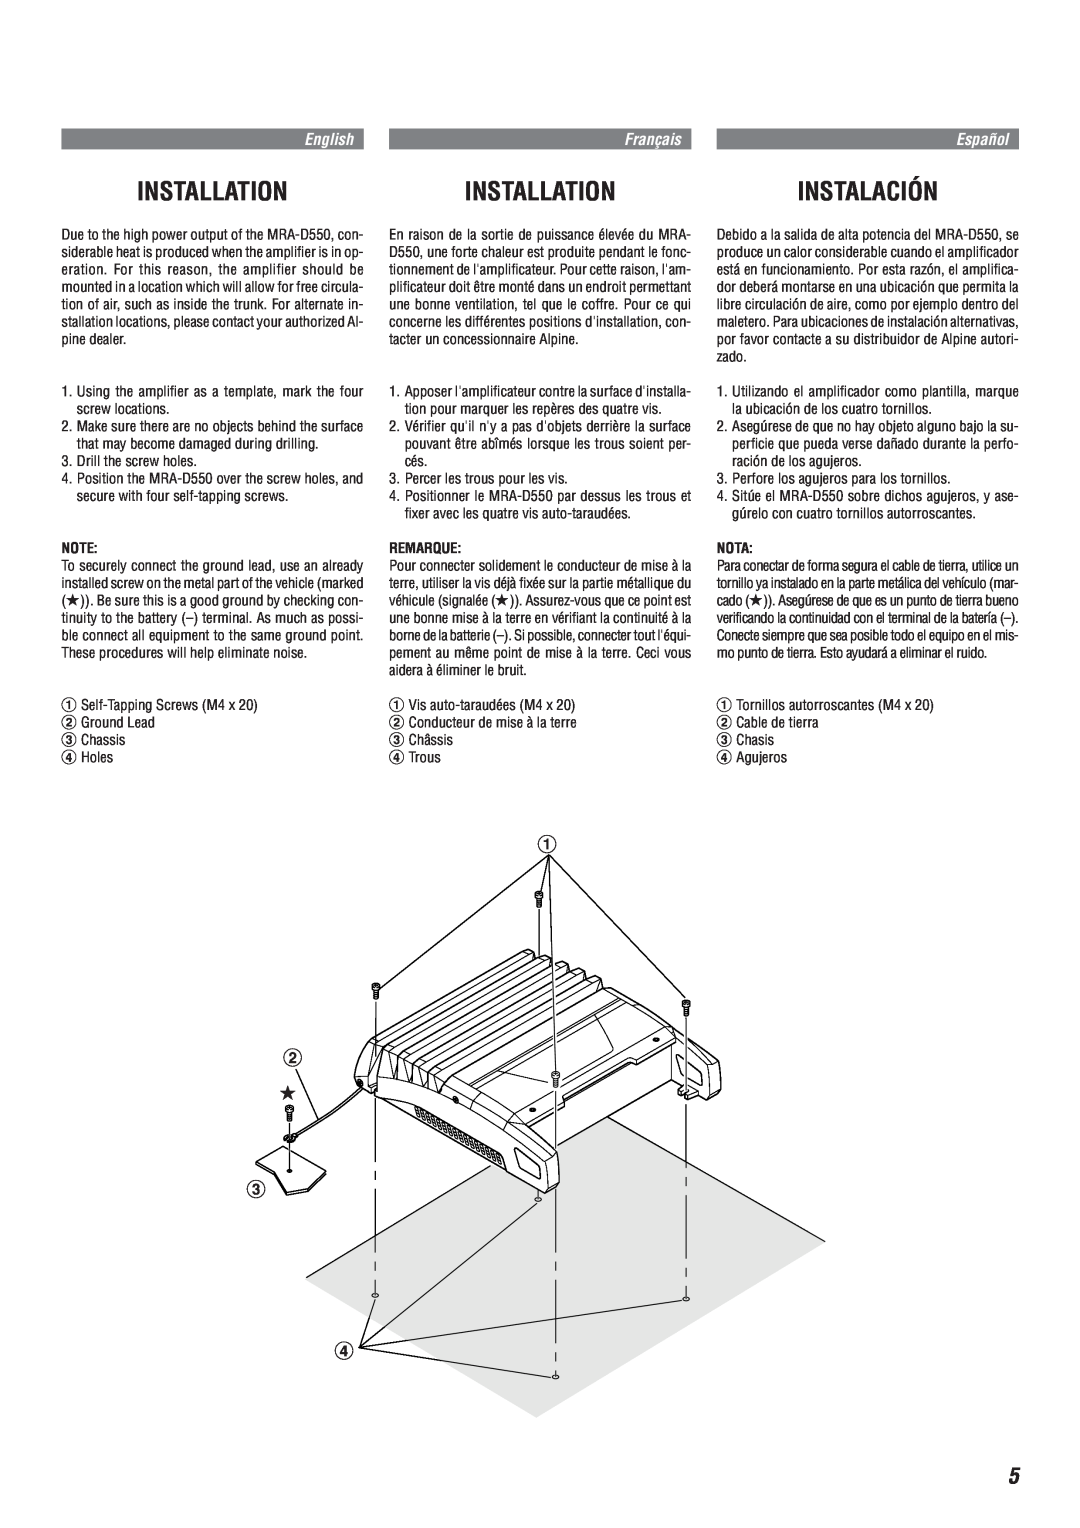 Alpine MRA-D550 owner manual Installation, Instalación, English, Français, Español 